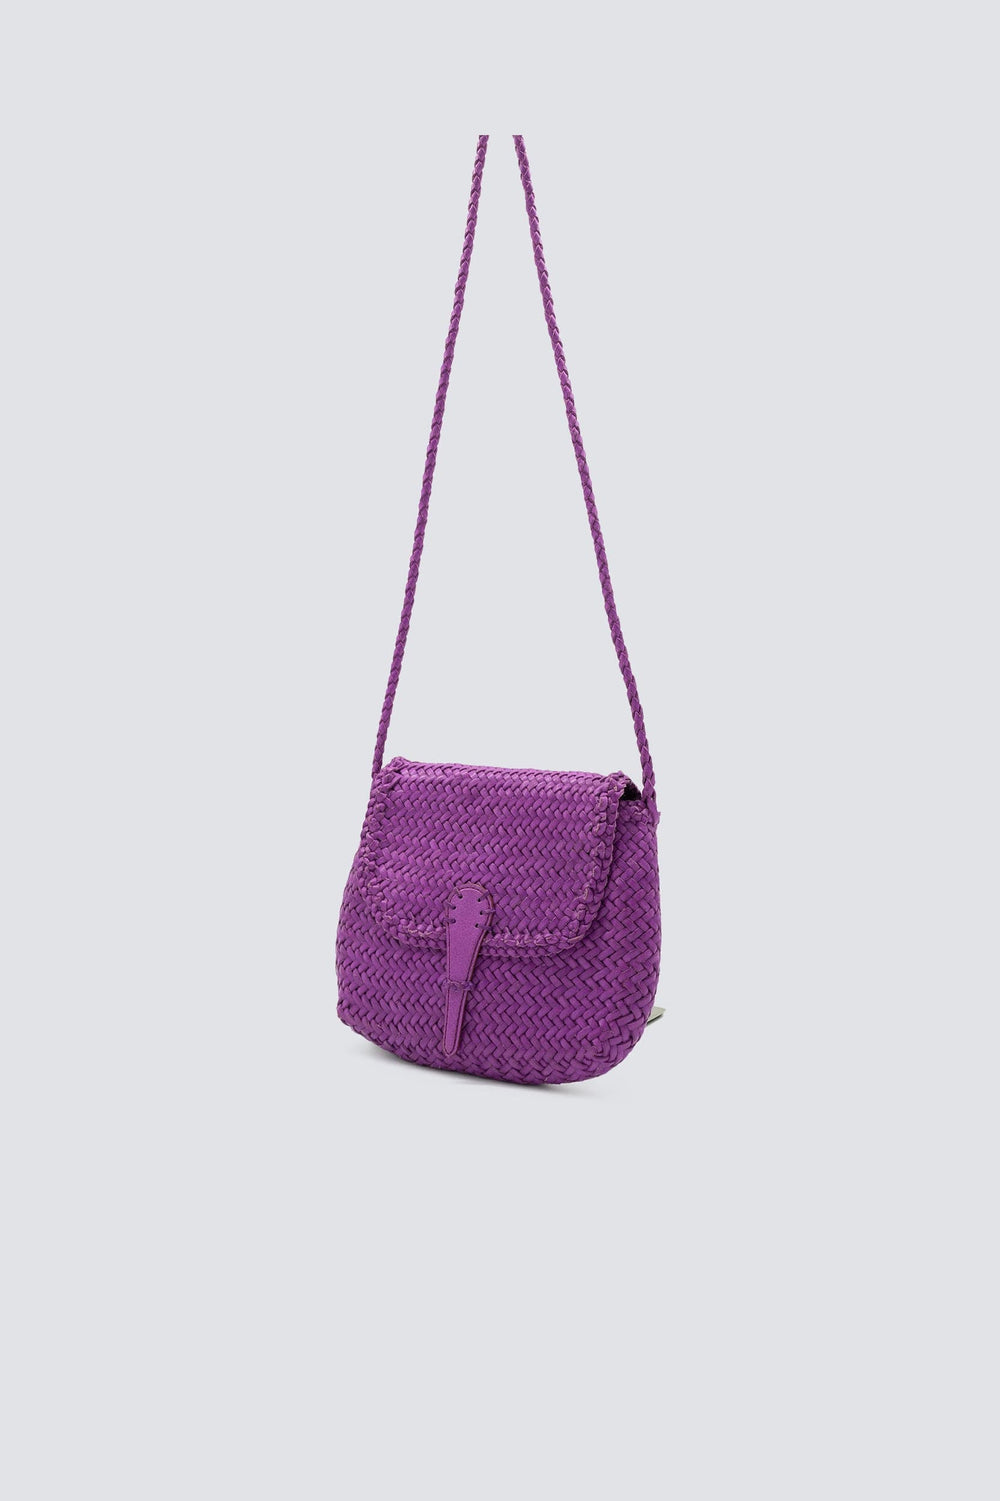 Dragon Diffusion woven leather bag handmade - Mini City Bag Magenta